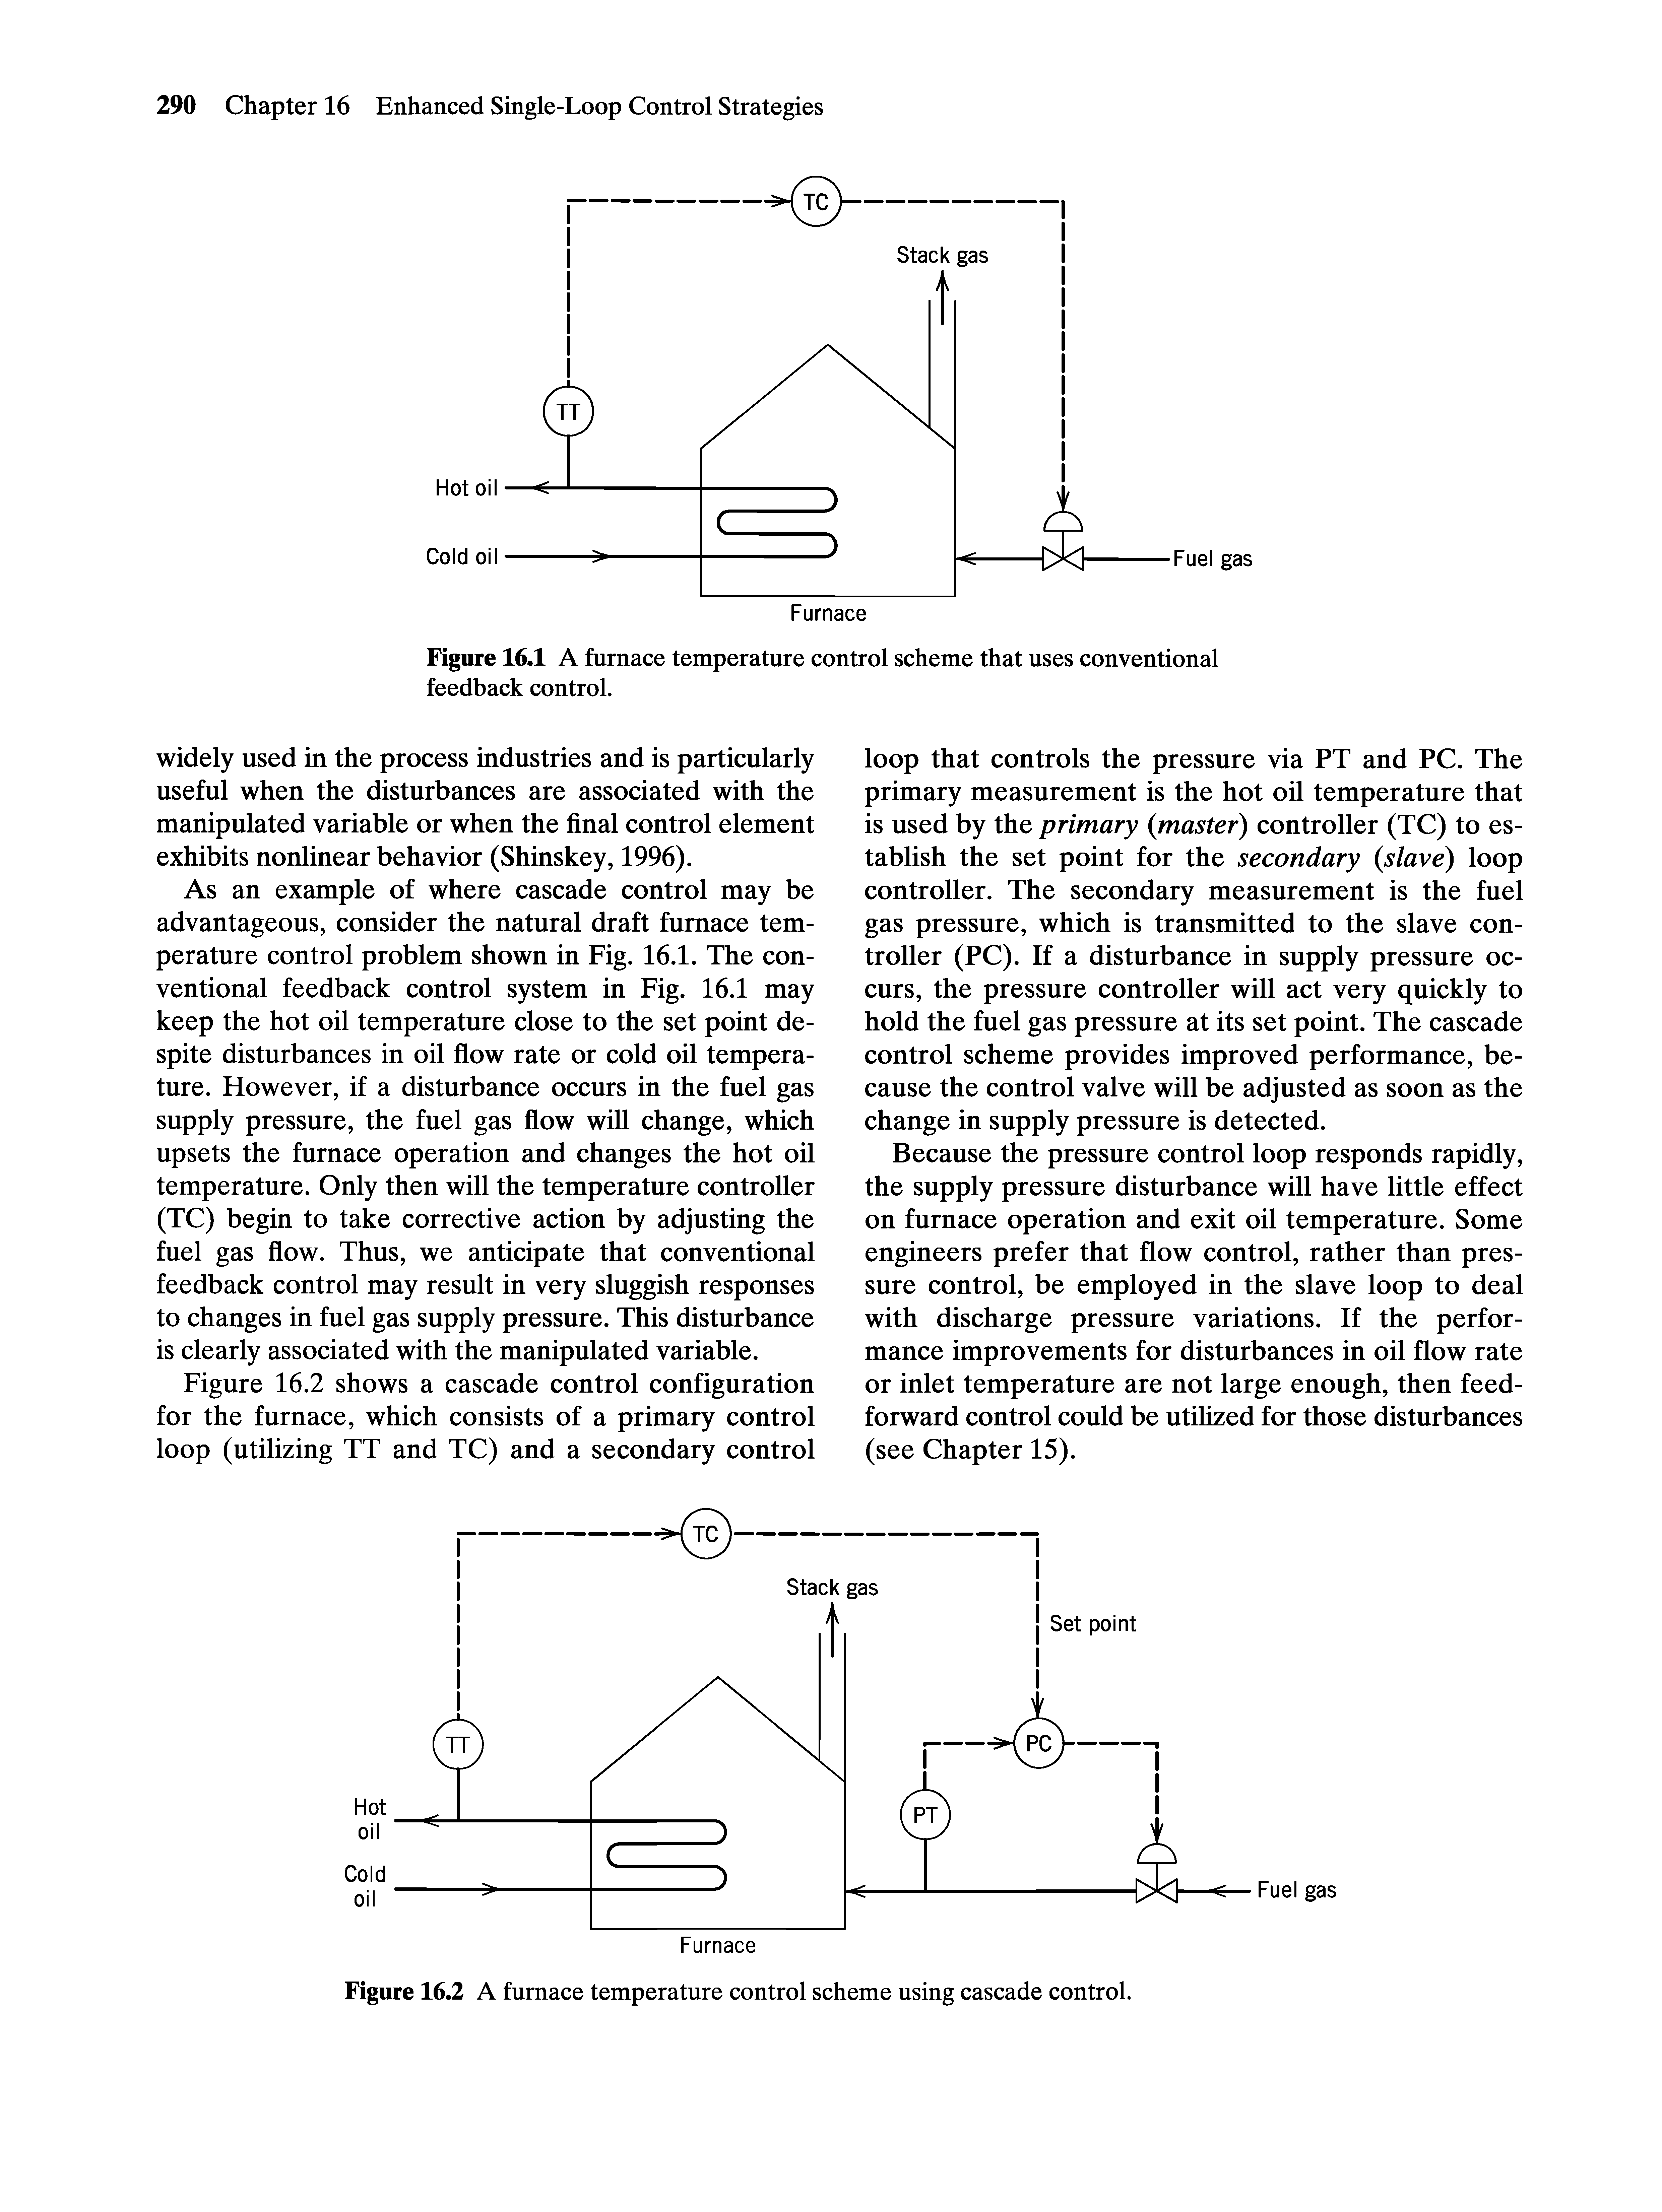 Figure 16.2 A furnace temperature control scheme using cascade control.